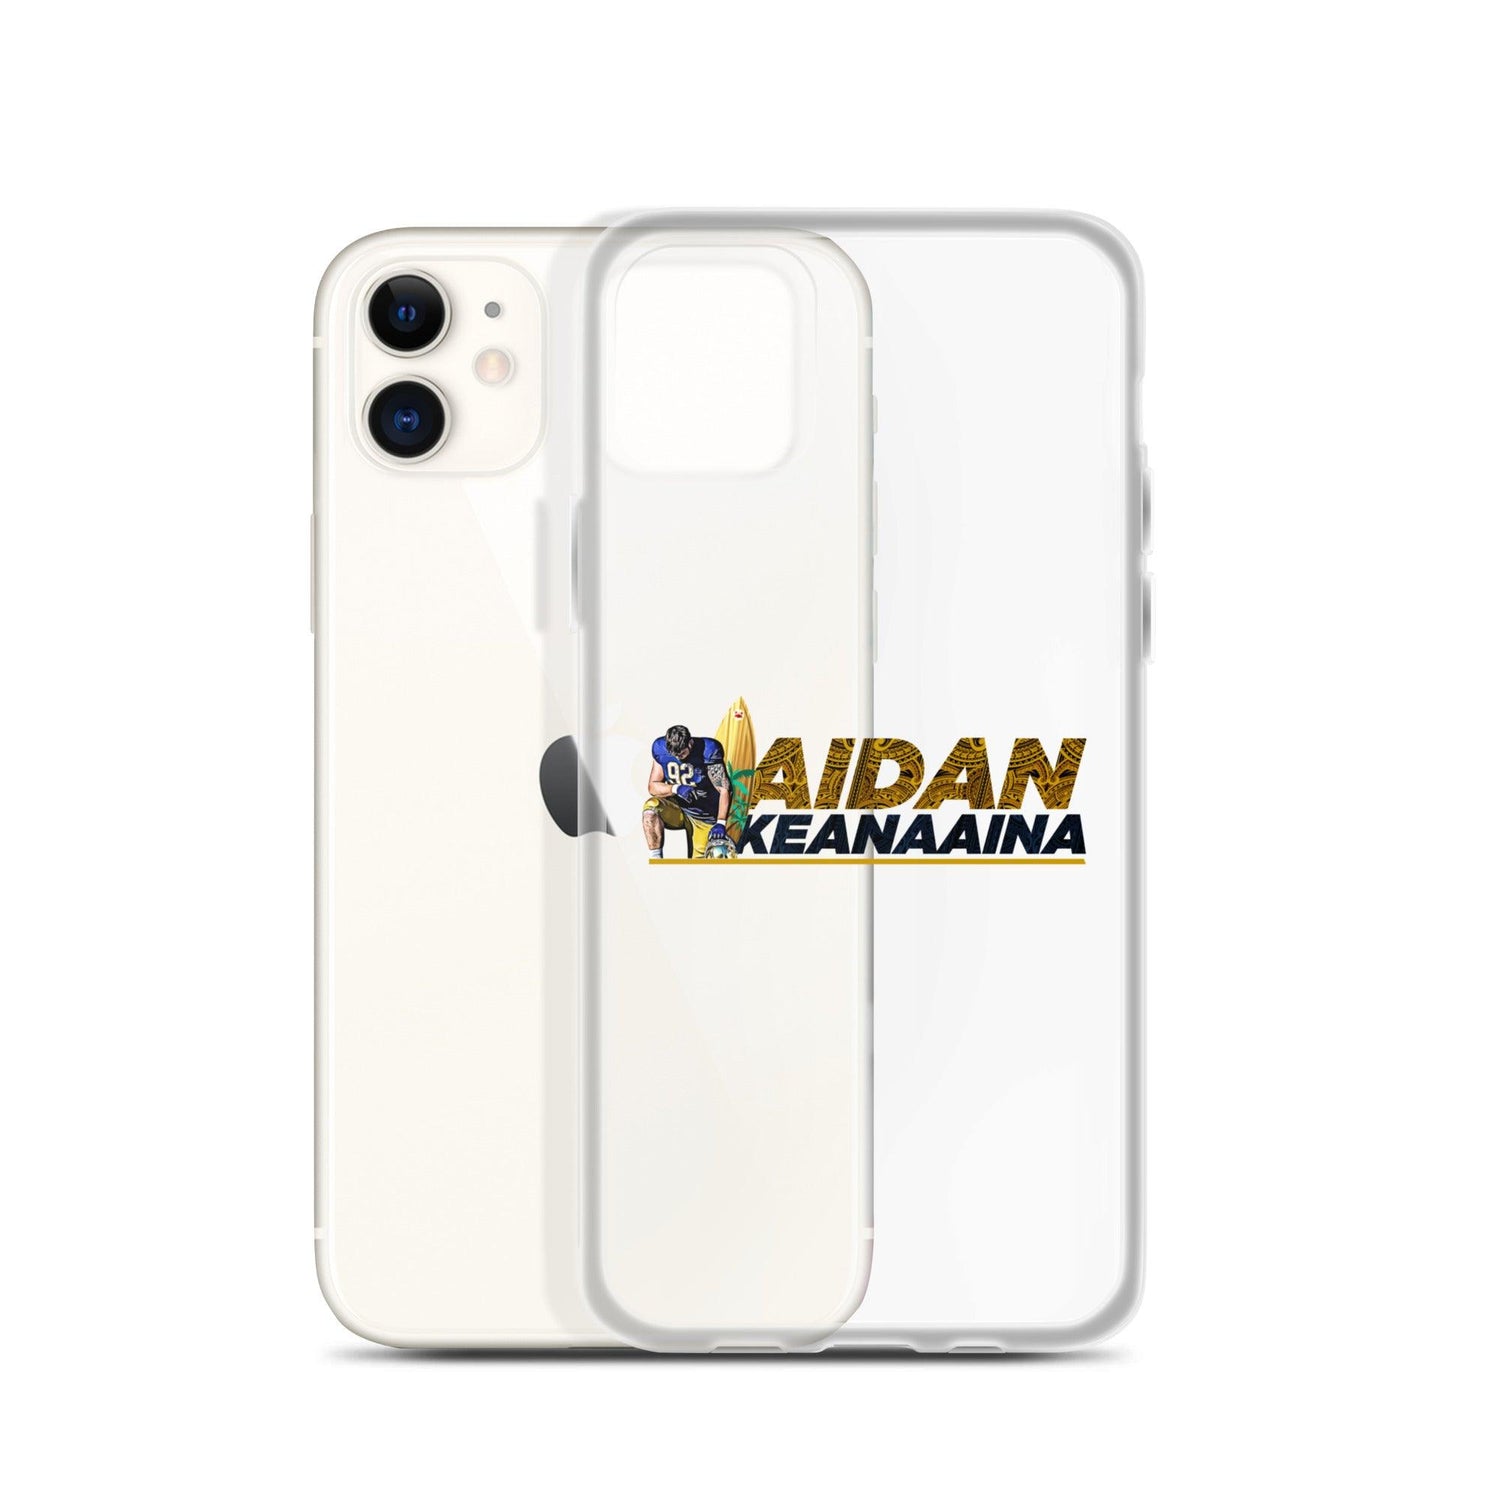 Aidan Keanaaina "Elite" iPhone Case - Fan Arch